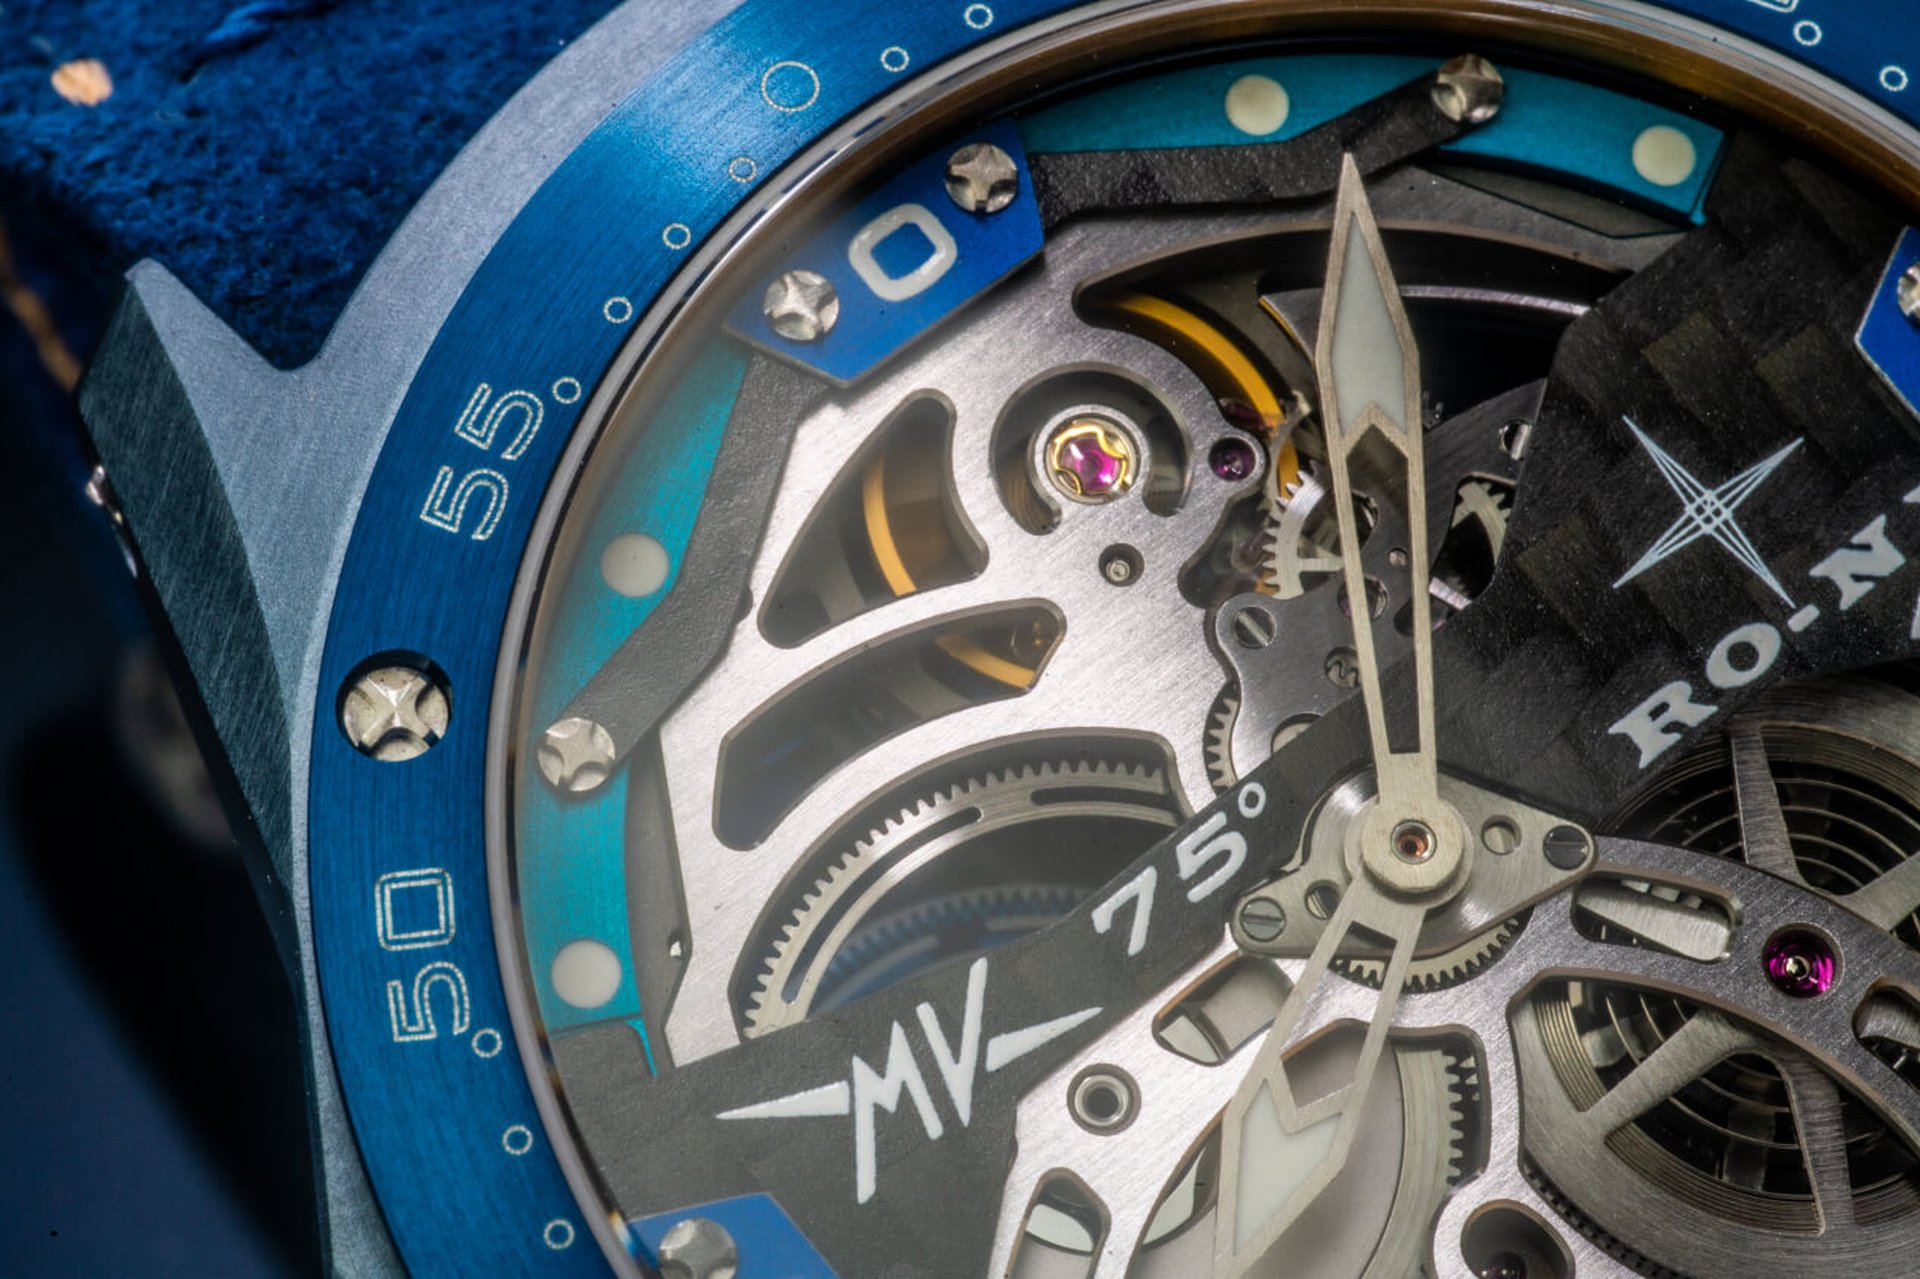 Swiss hyperwatch creator RO-NI to handcraft RMV automatic watch